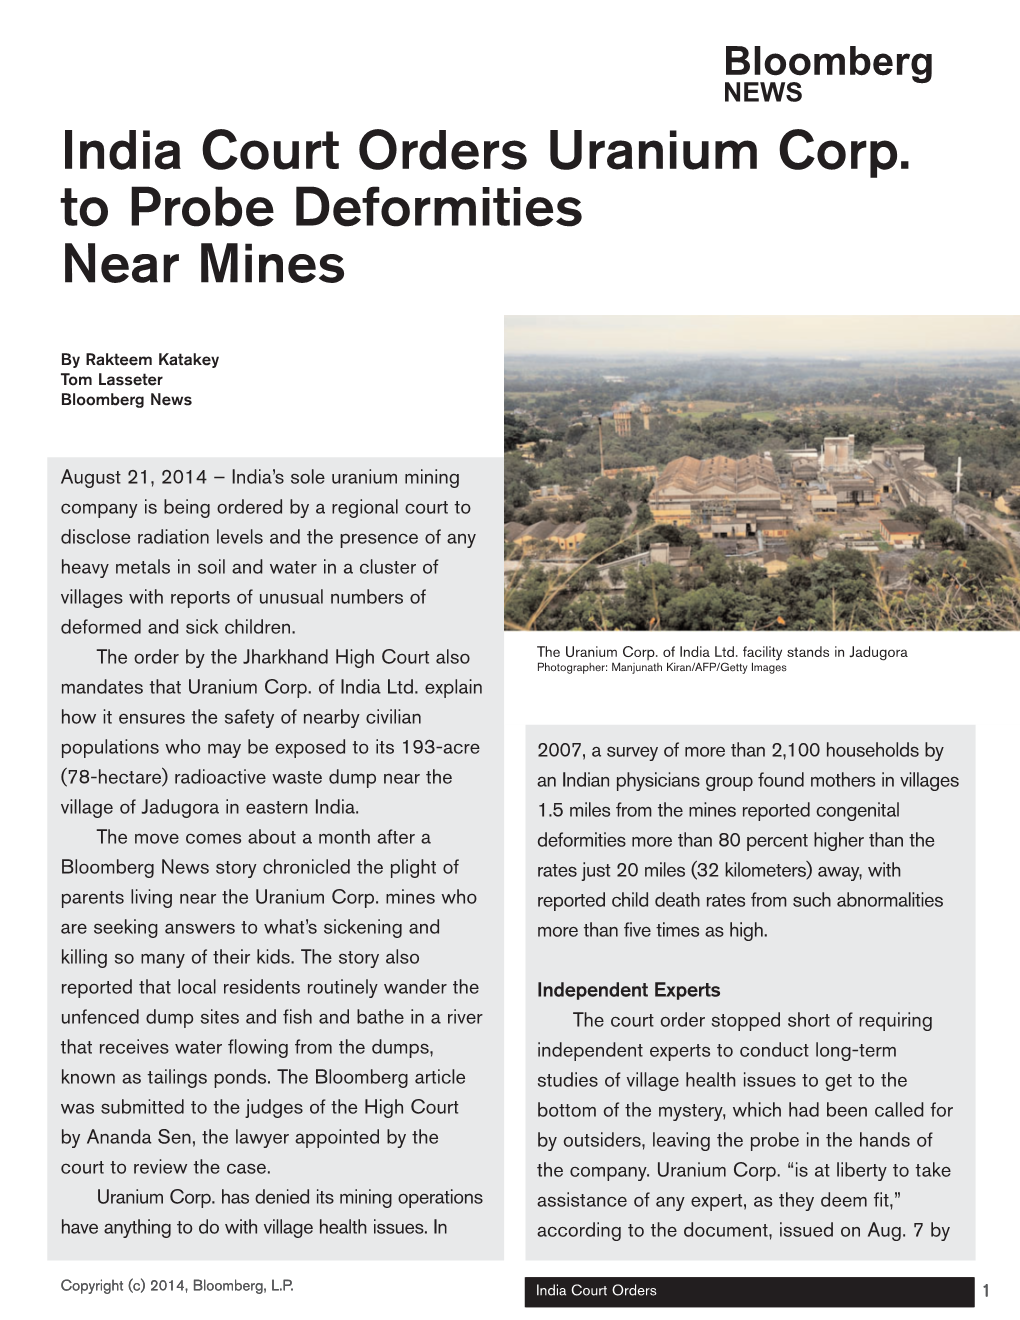 India Court Orders Uranium Corp. to Probe Deformities Near Mines